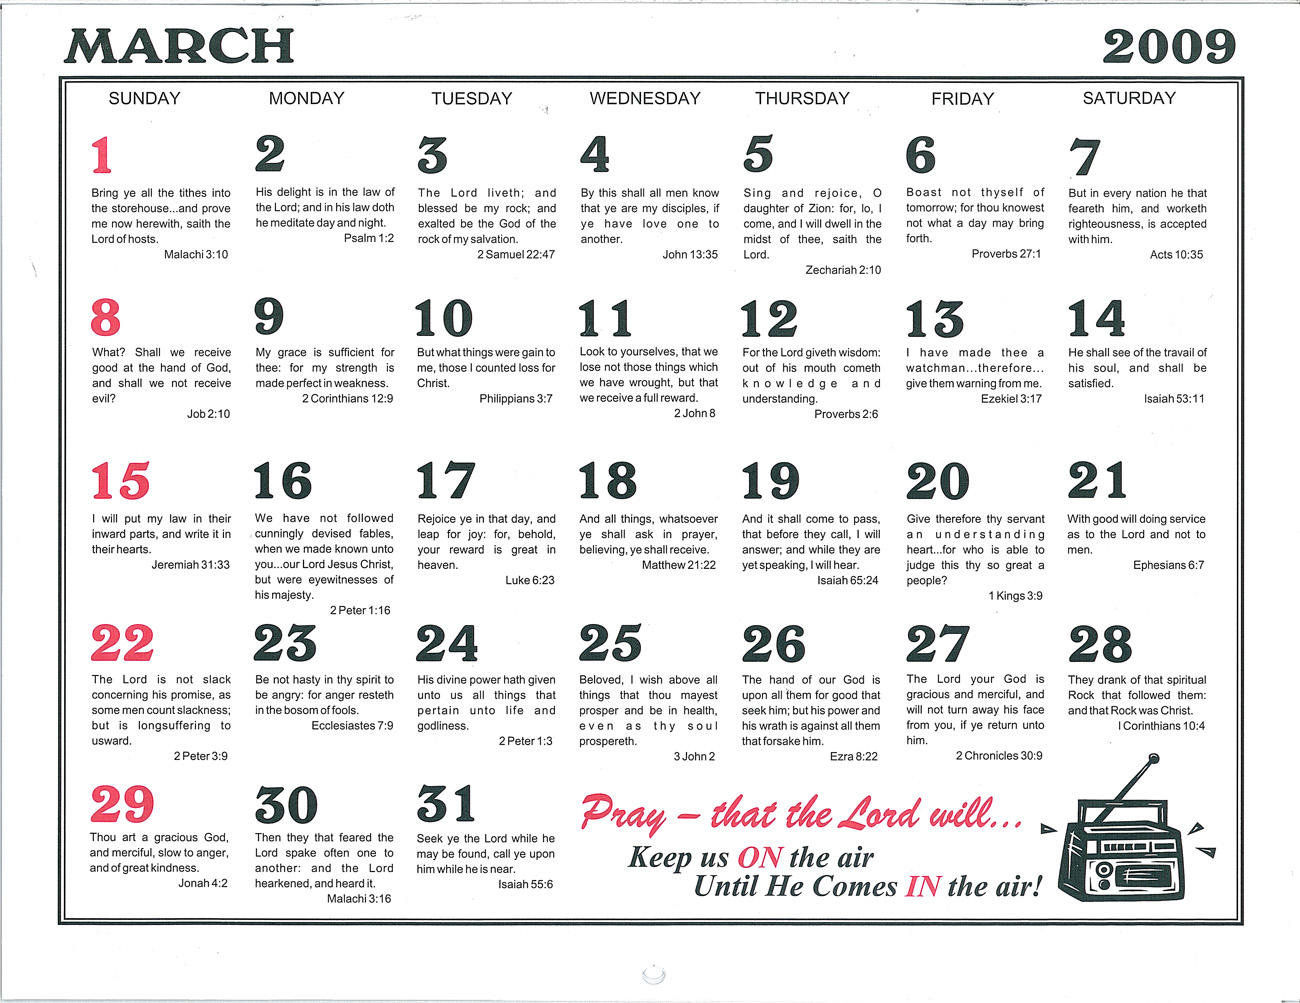 March: 2009 Daily Bible Text Calendar